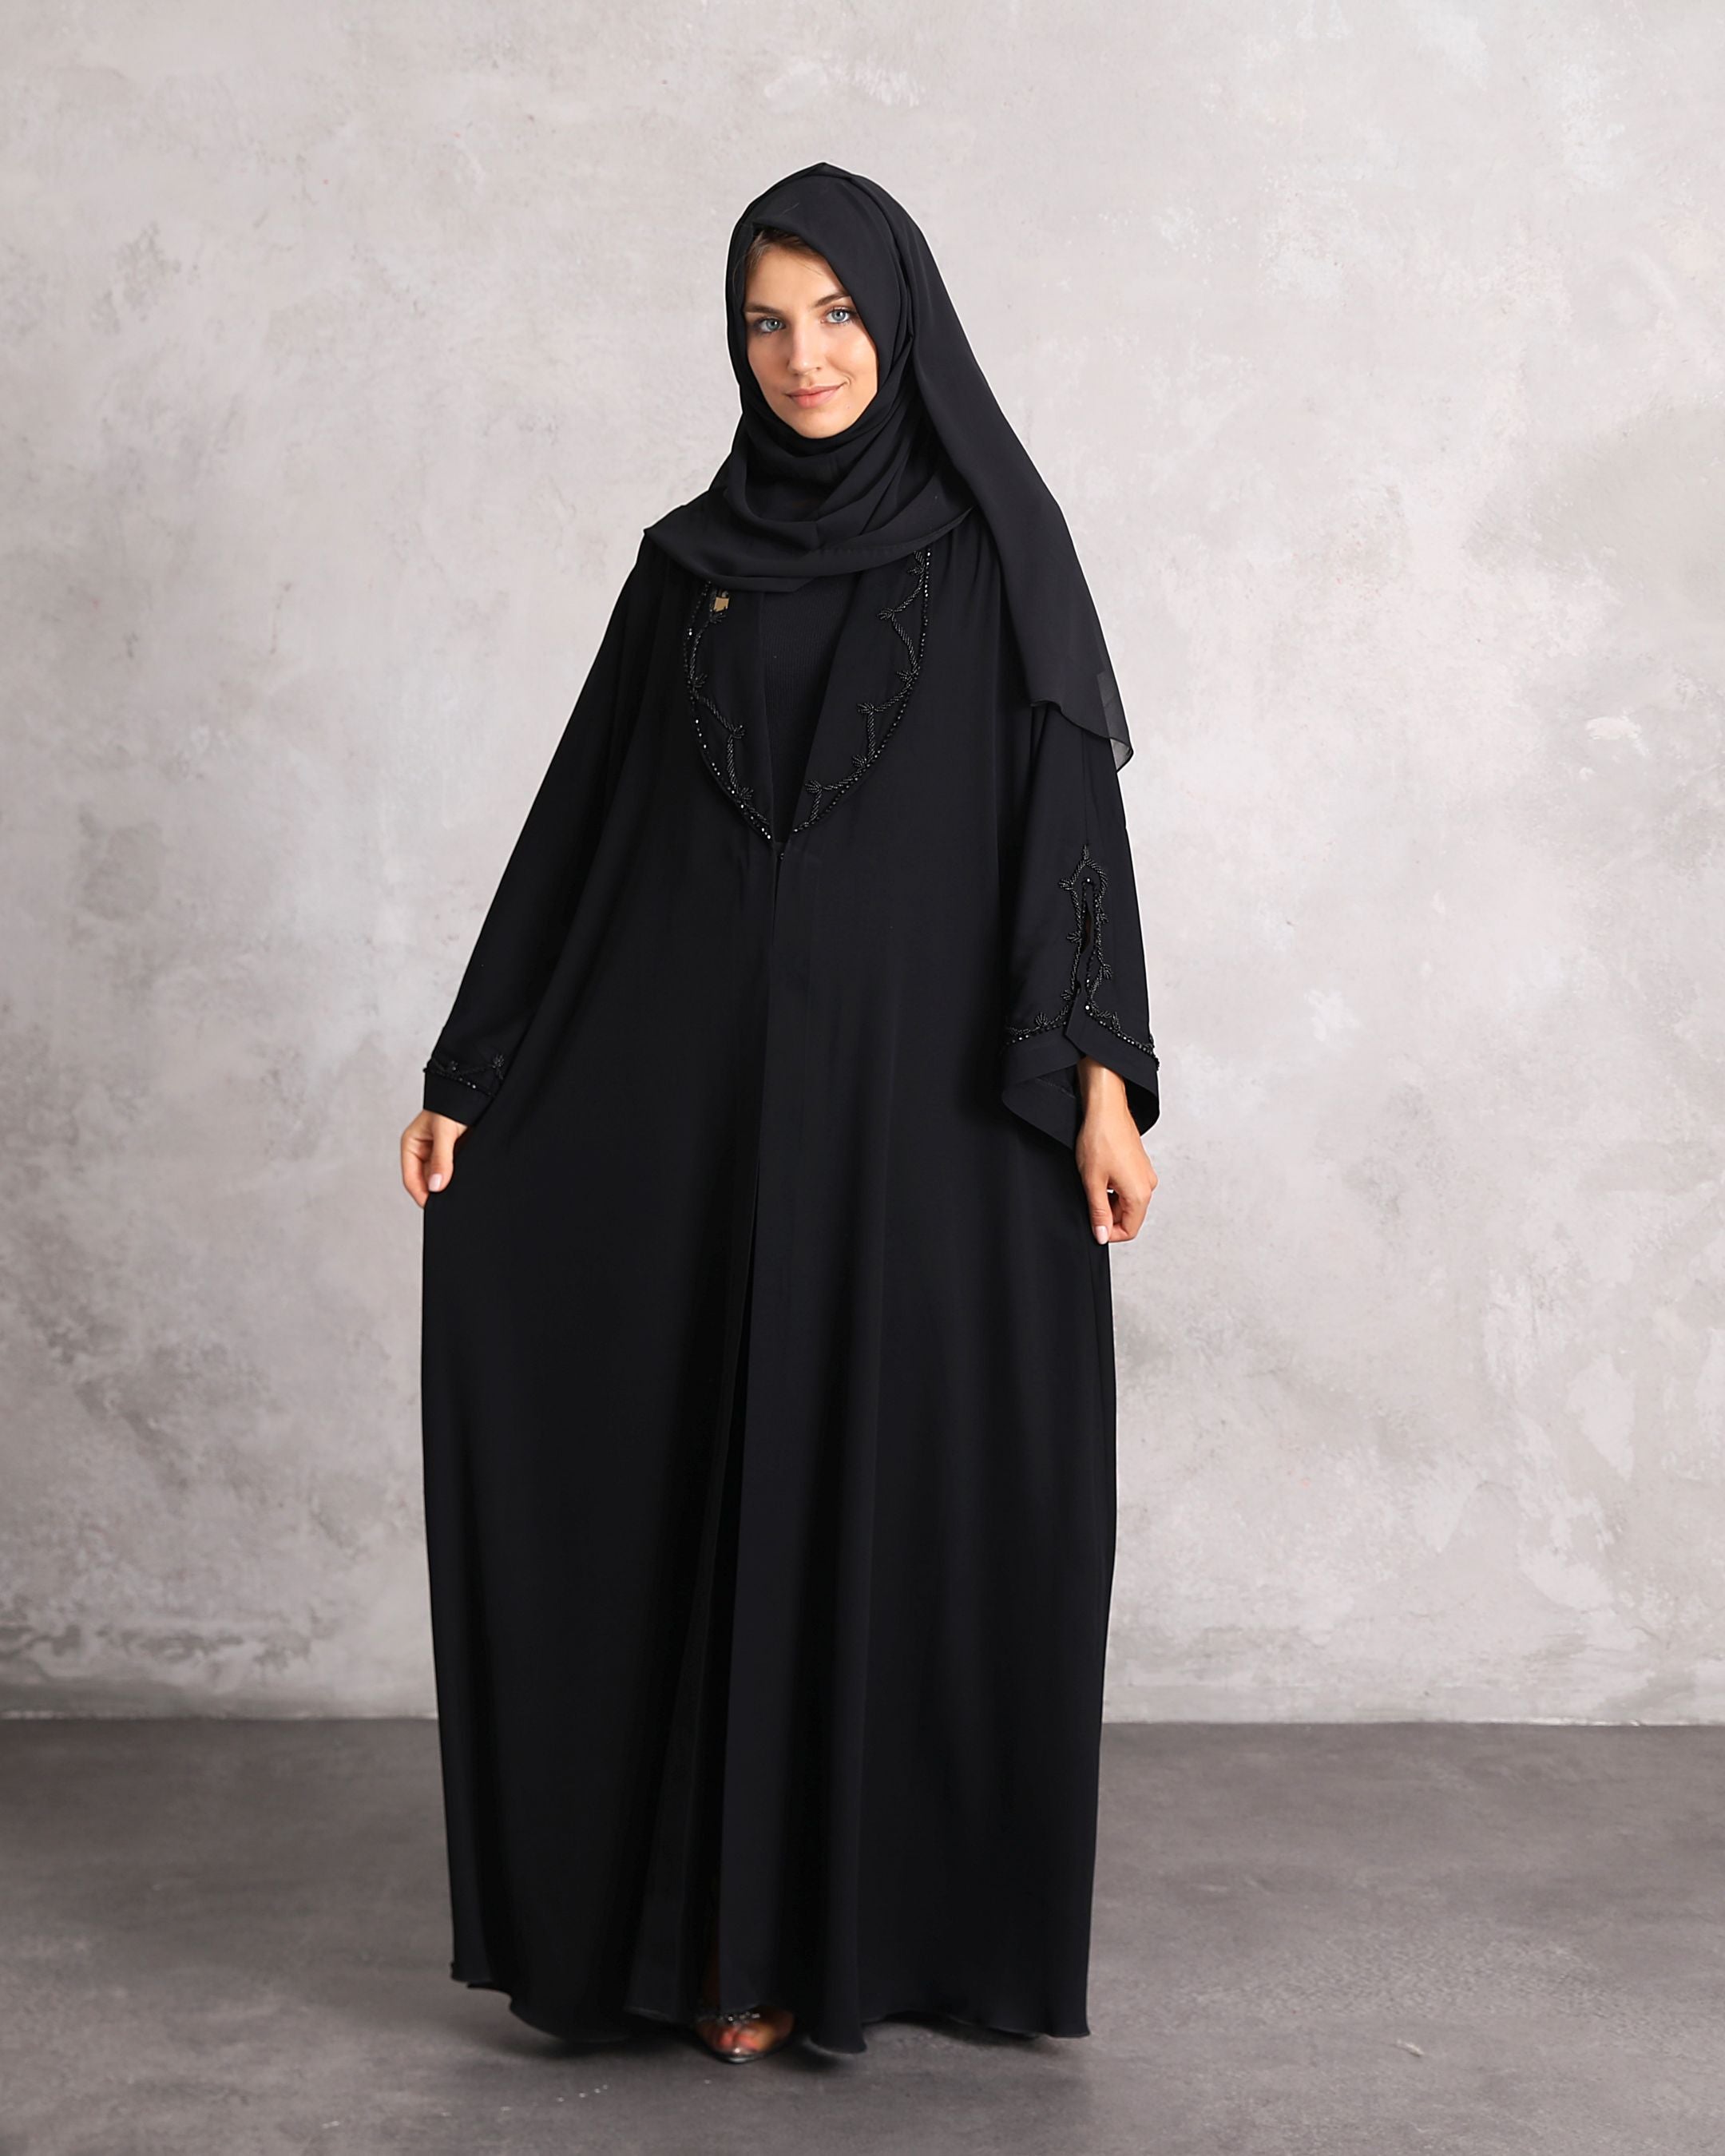 Timeless Allure: Handmade Stone Embellished Black Abaya in Nida Fabric